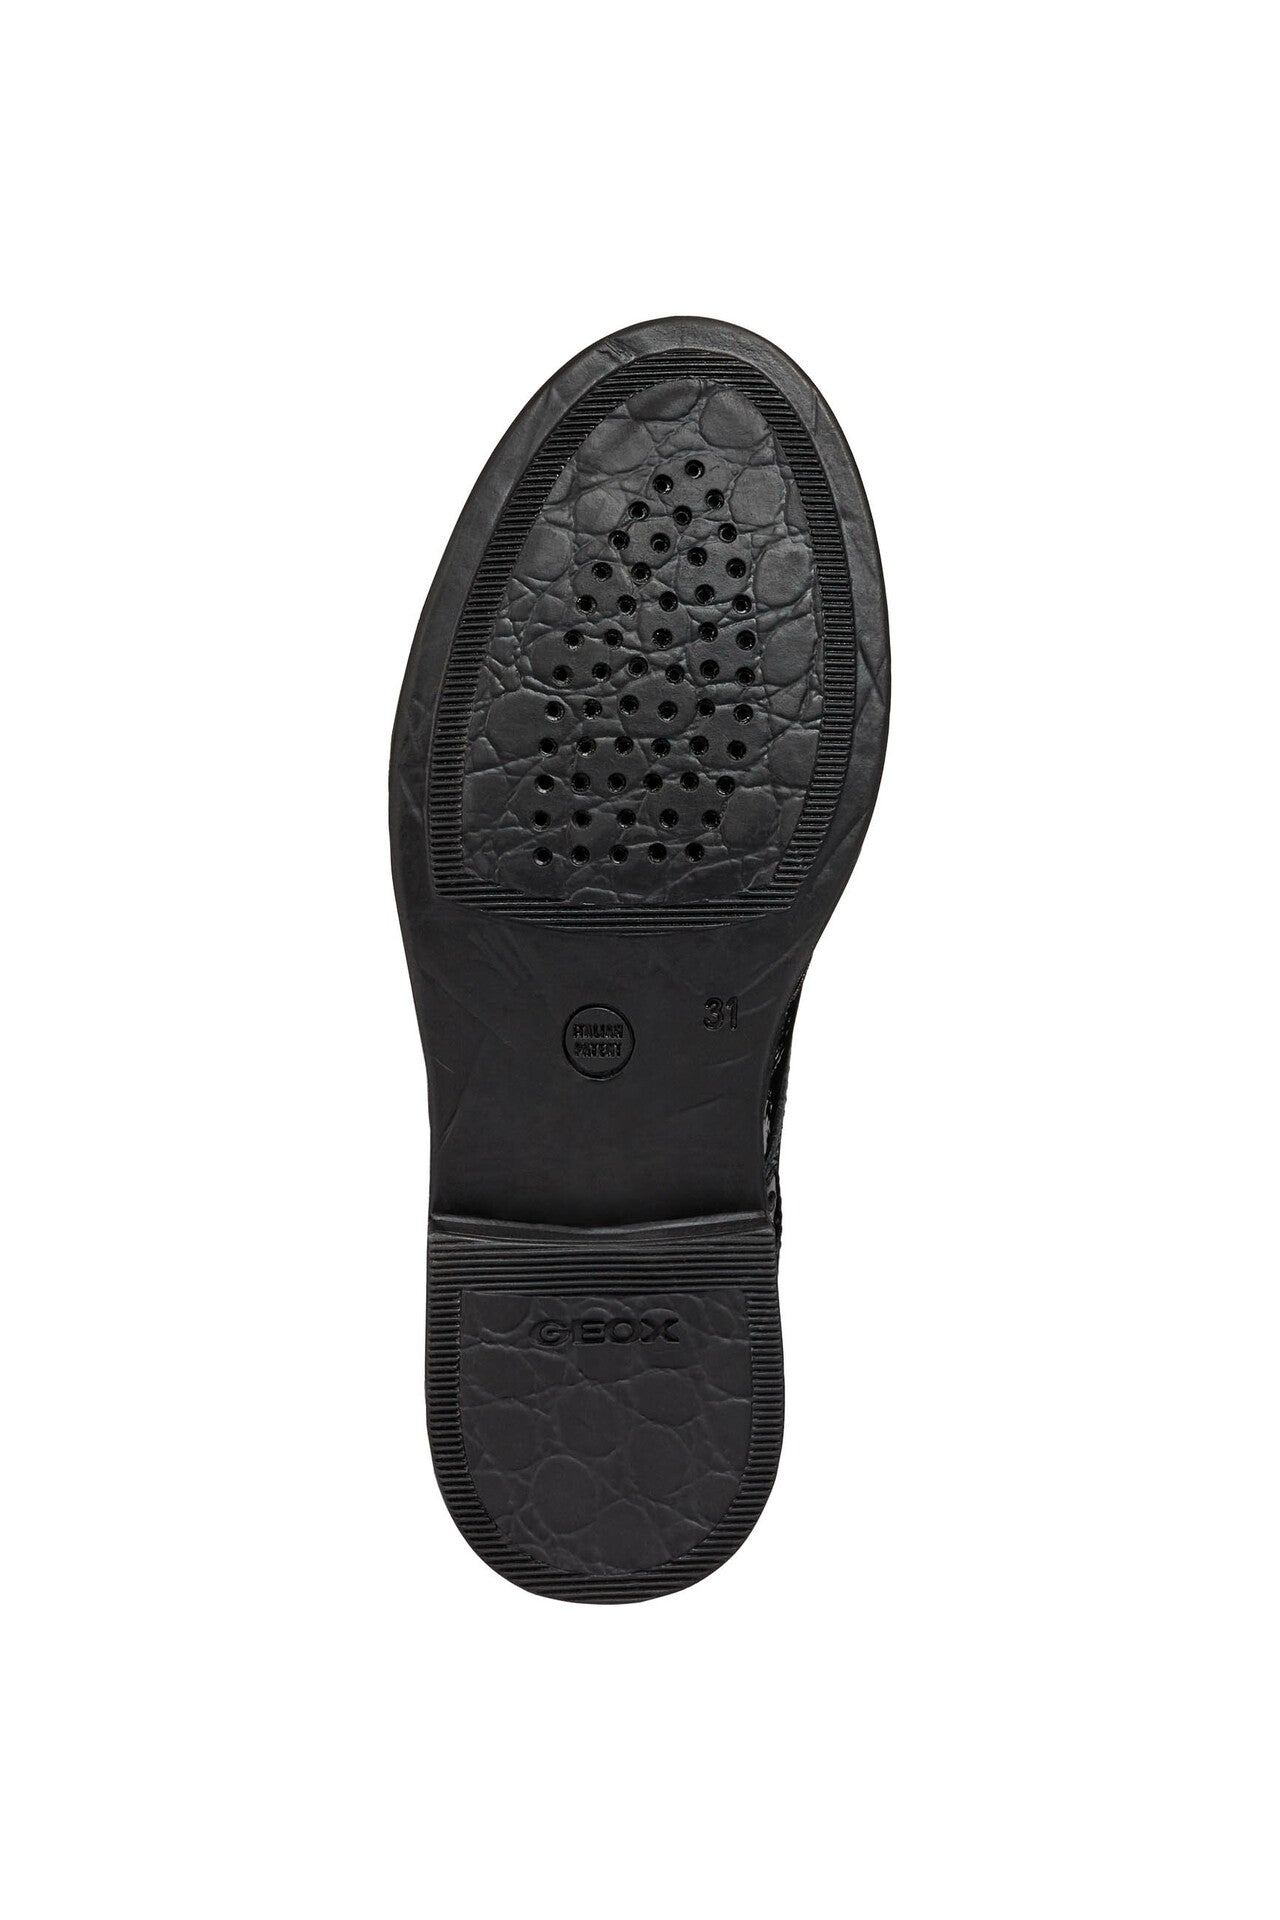 Agata Lace Up Black Patent Leather Girls School Shoe